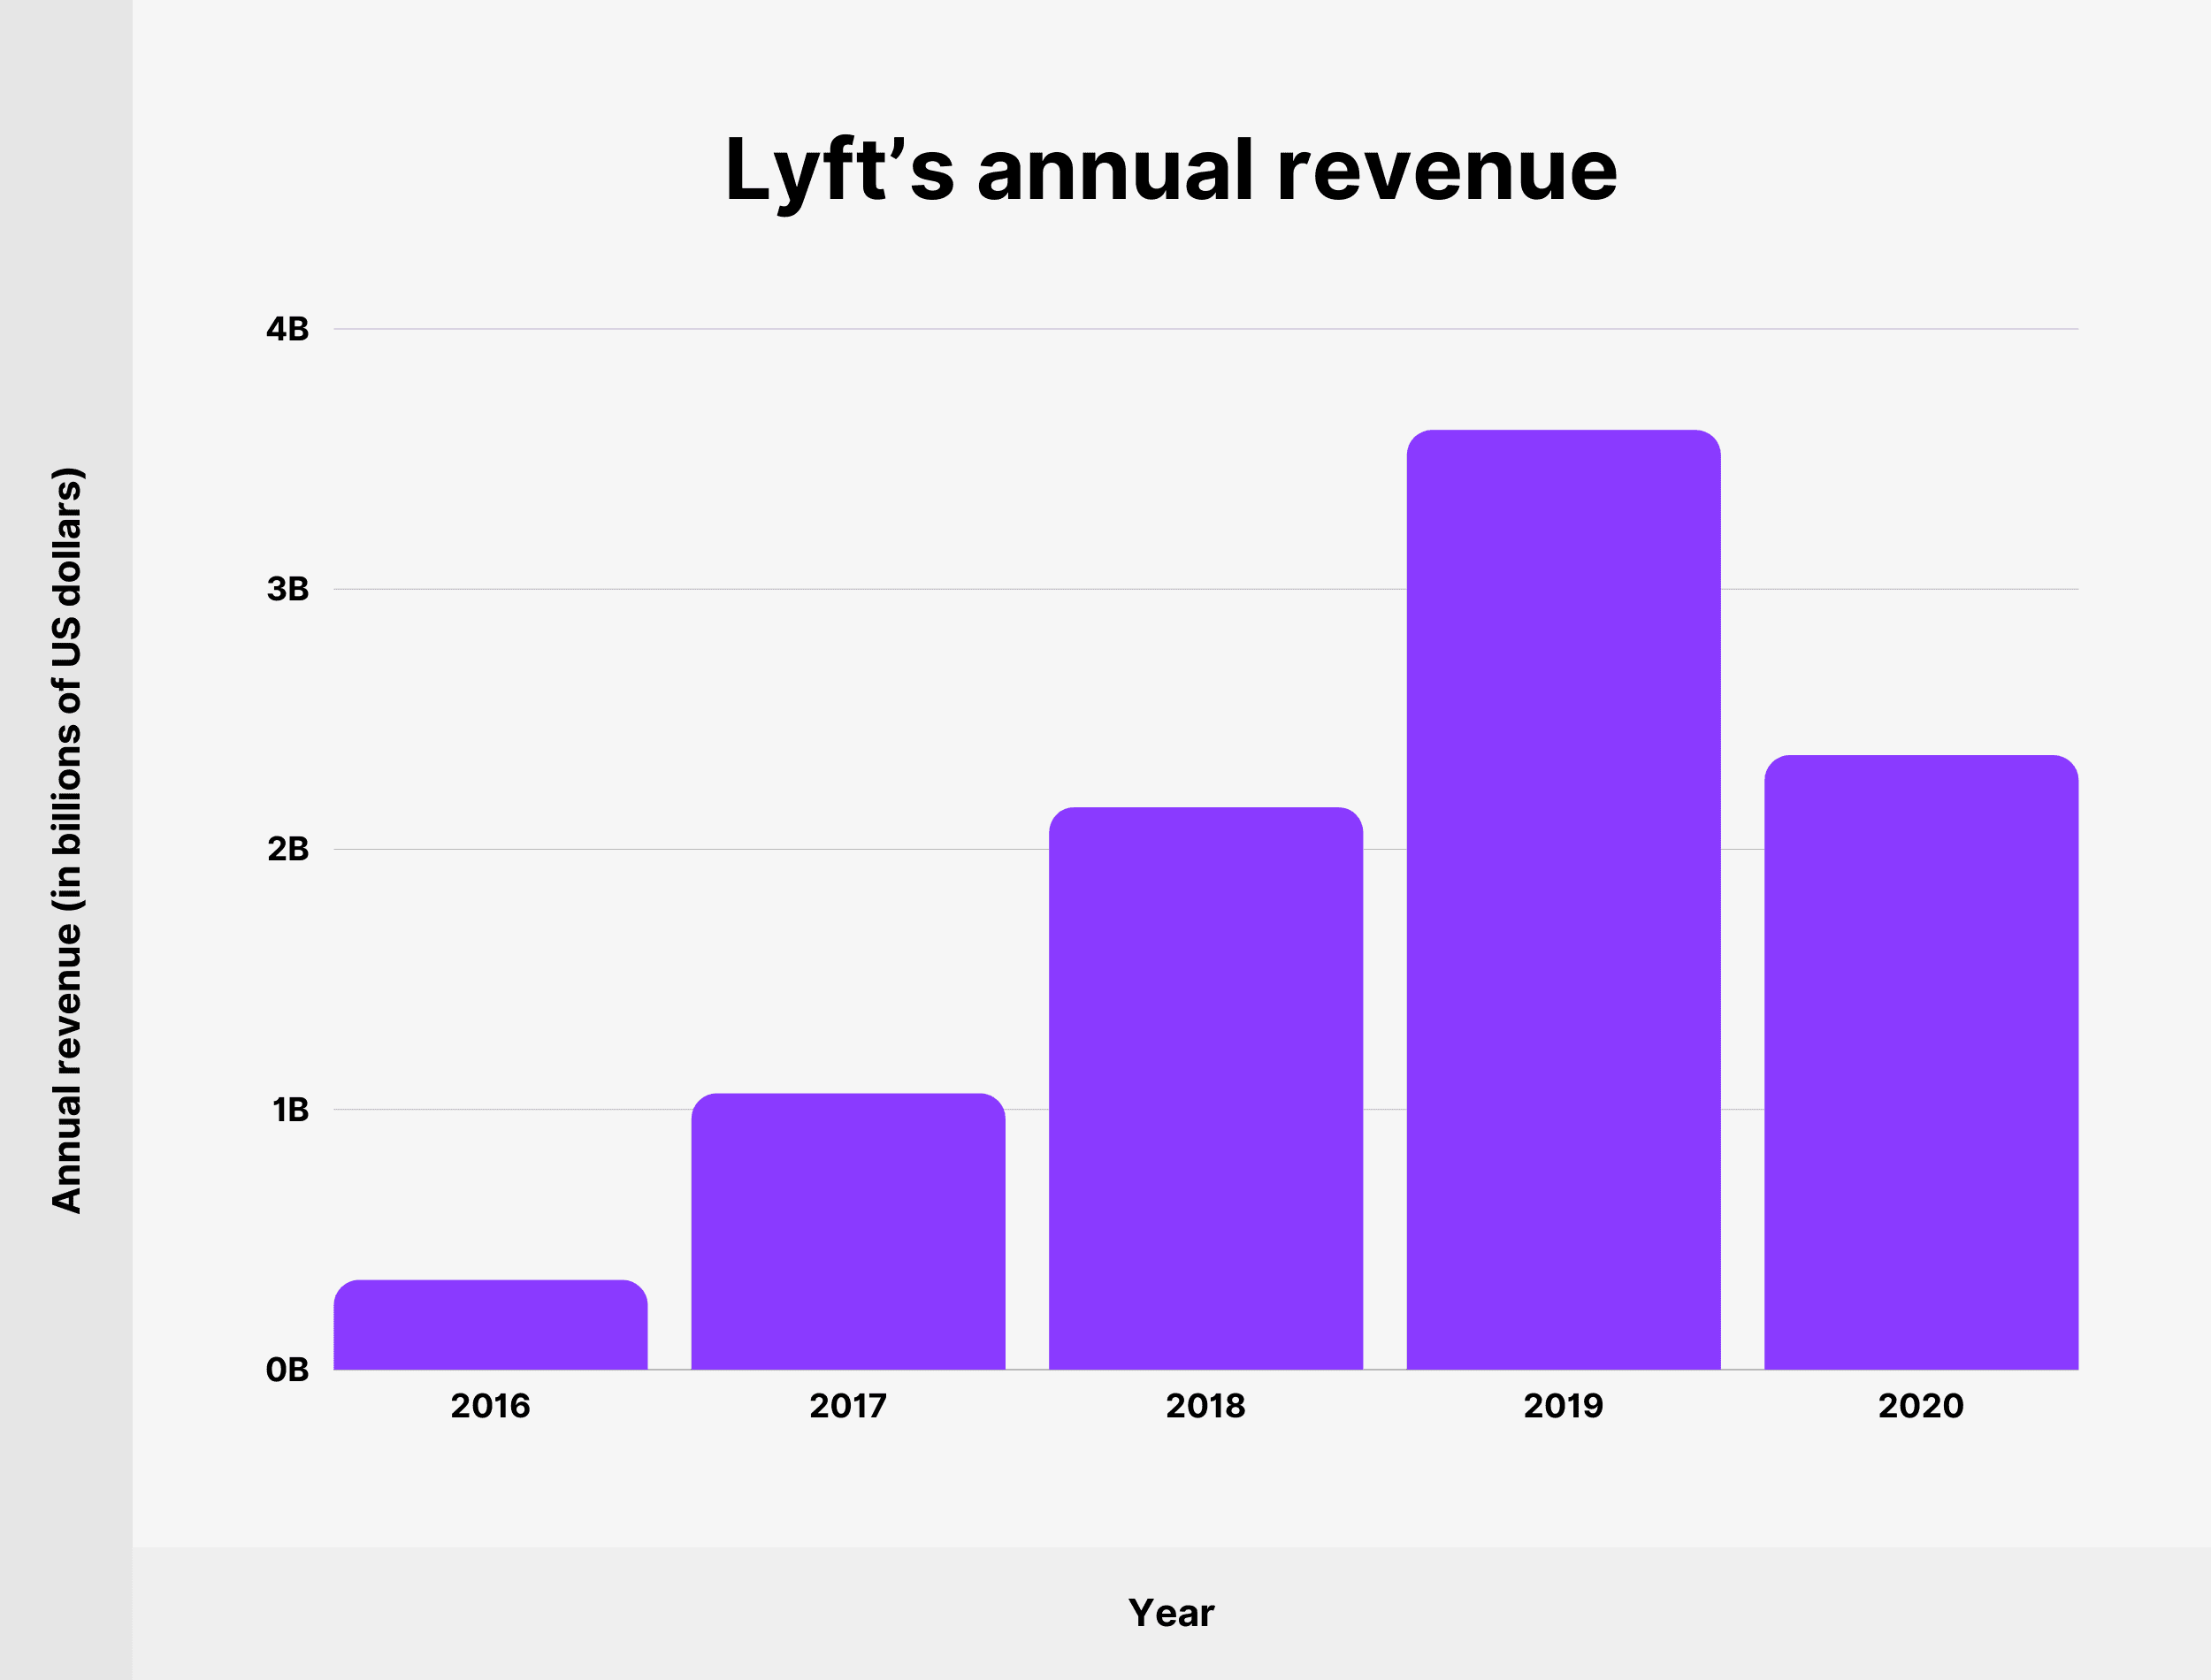 Lyft’s annual revenue